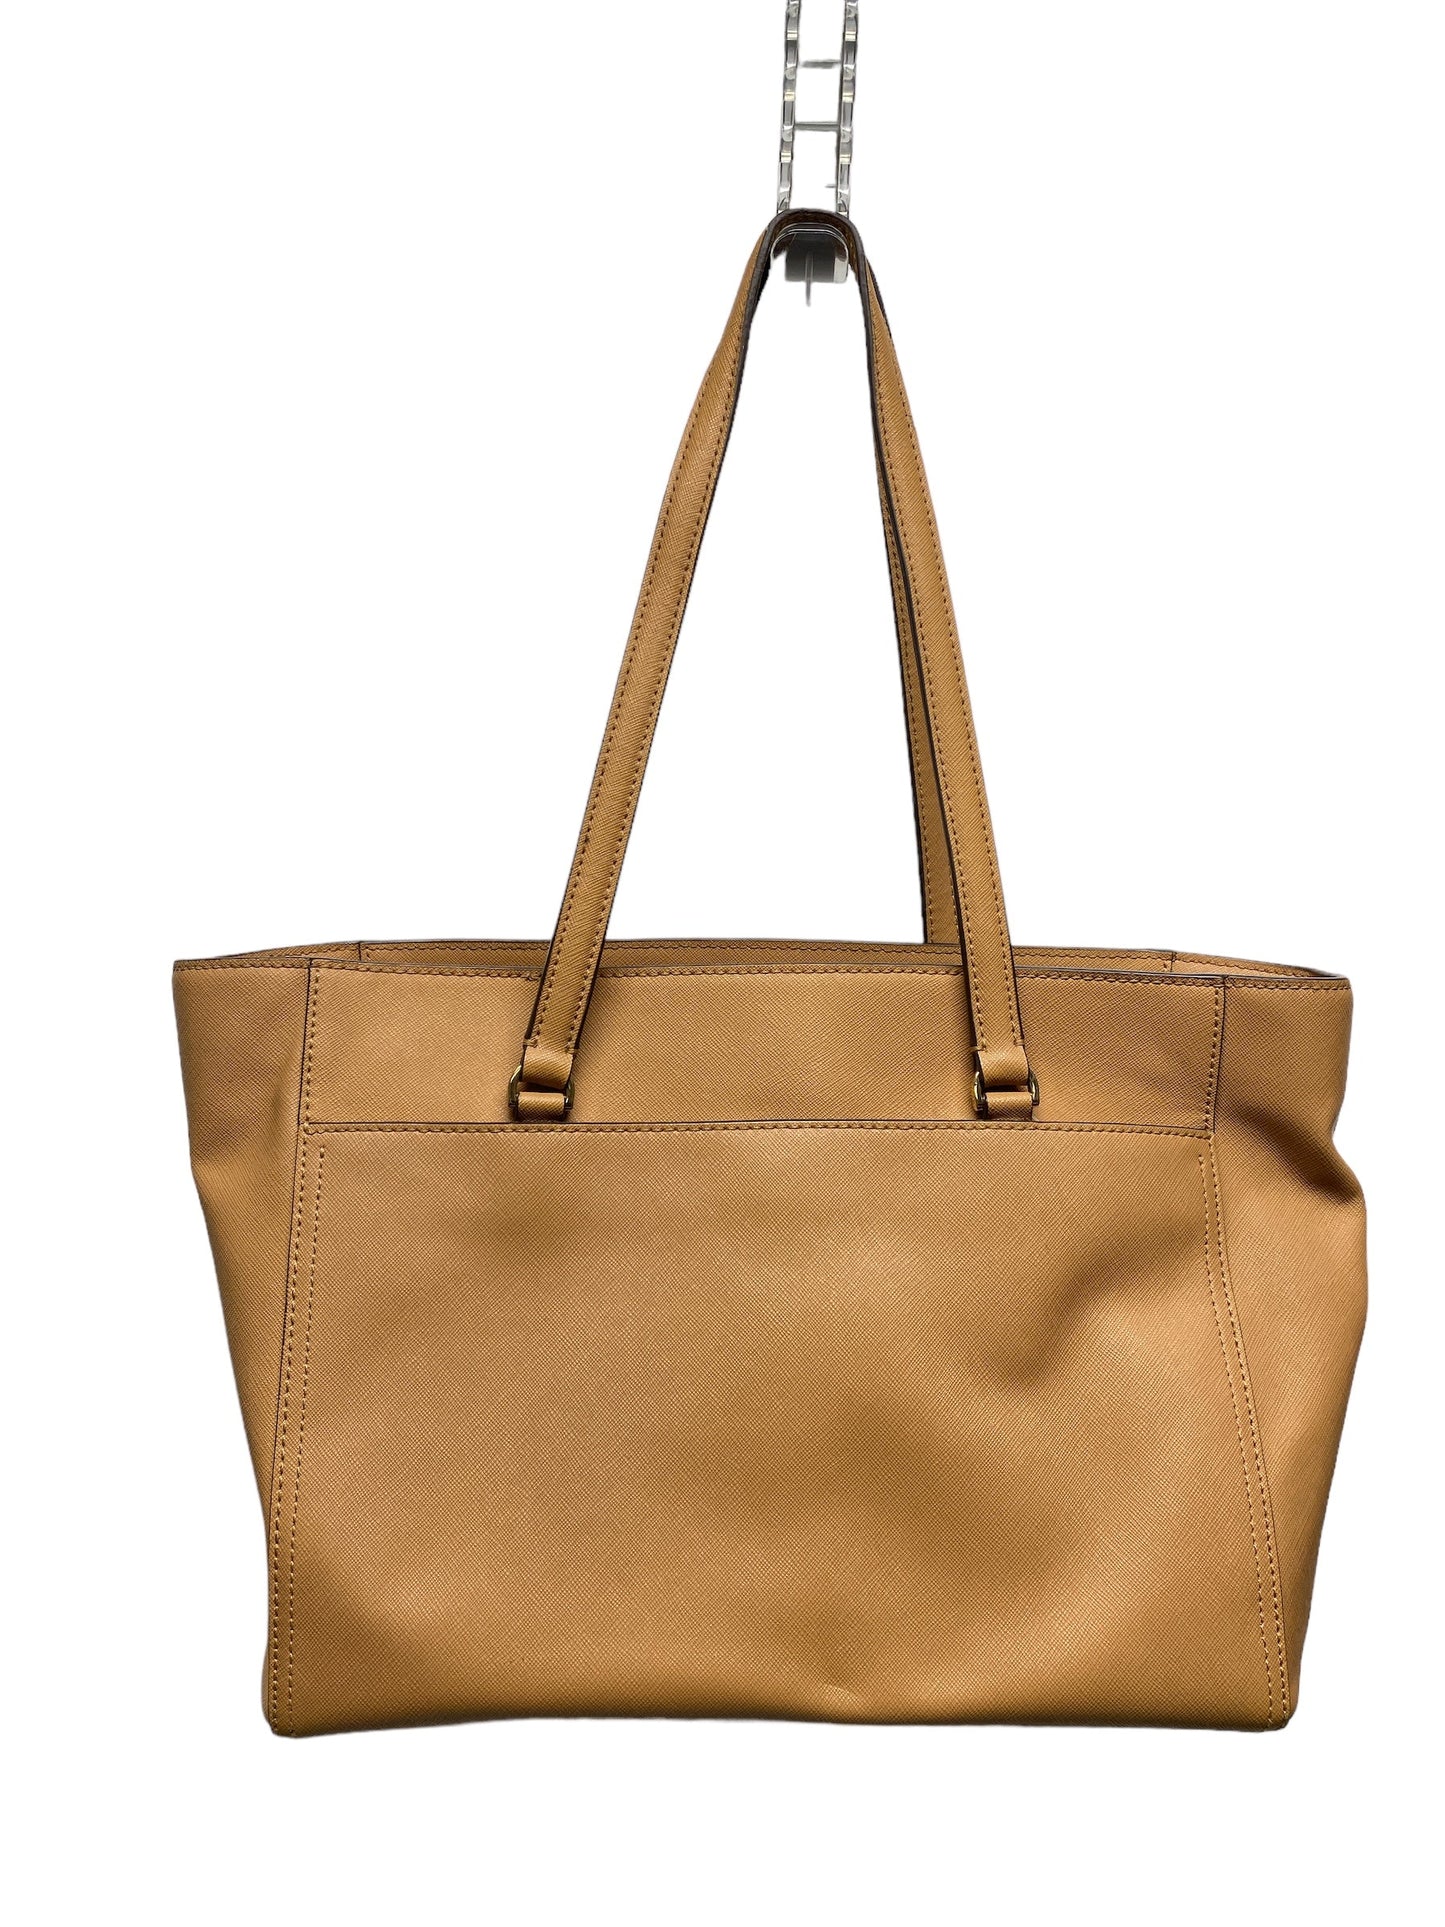 Tan Handbag Designer Tory Burch, Size Large